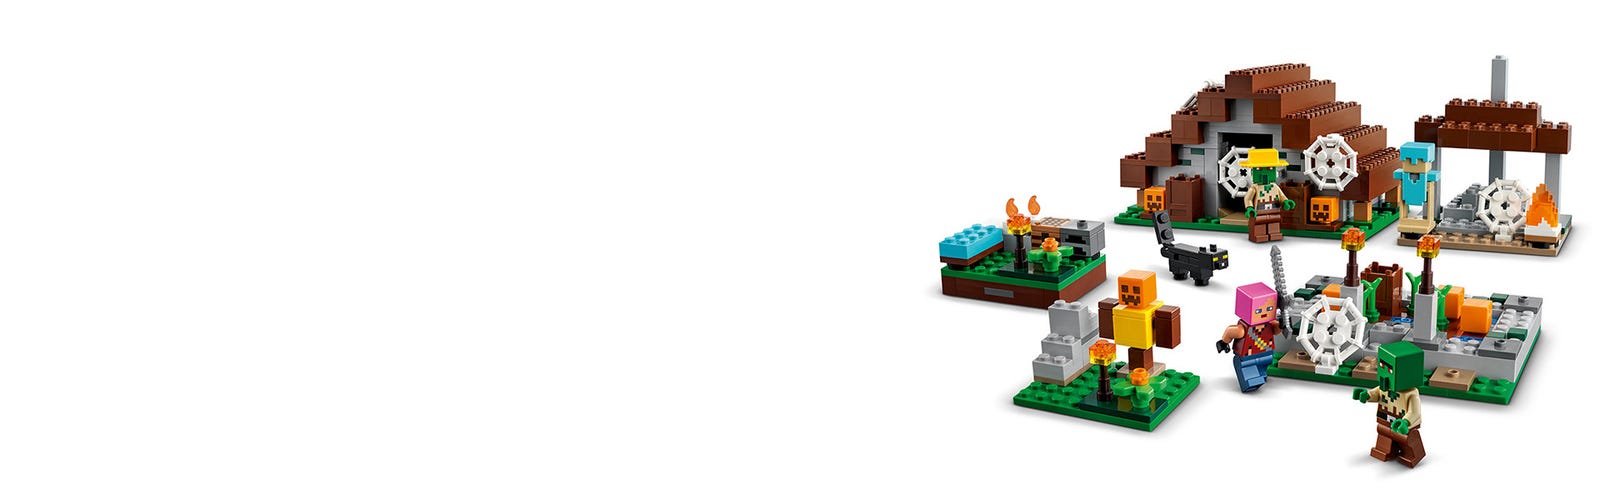 LEGO Minecraft The Abandoned Village 21190 Building Kit (422